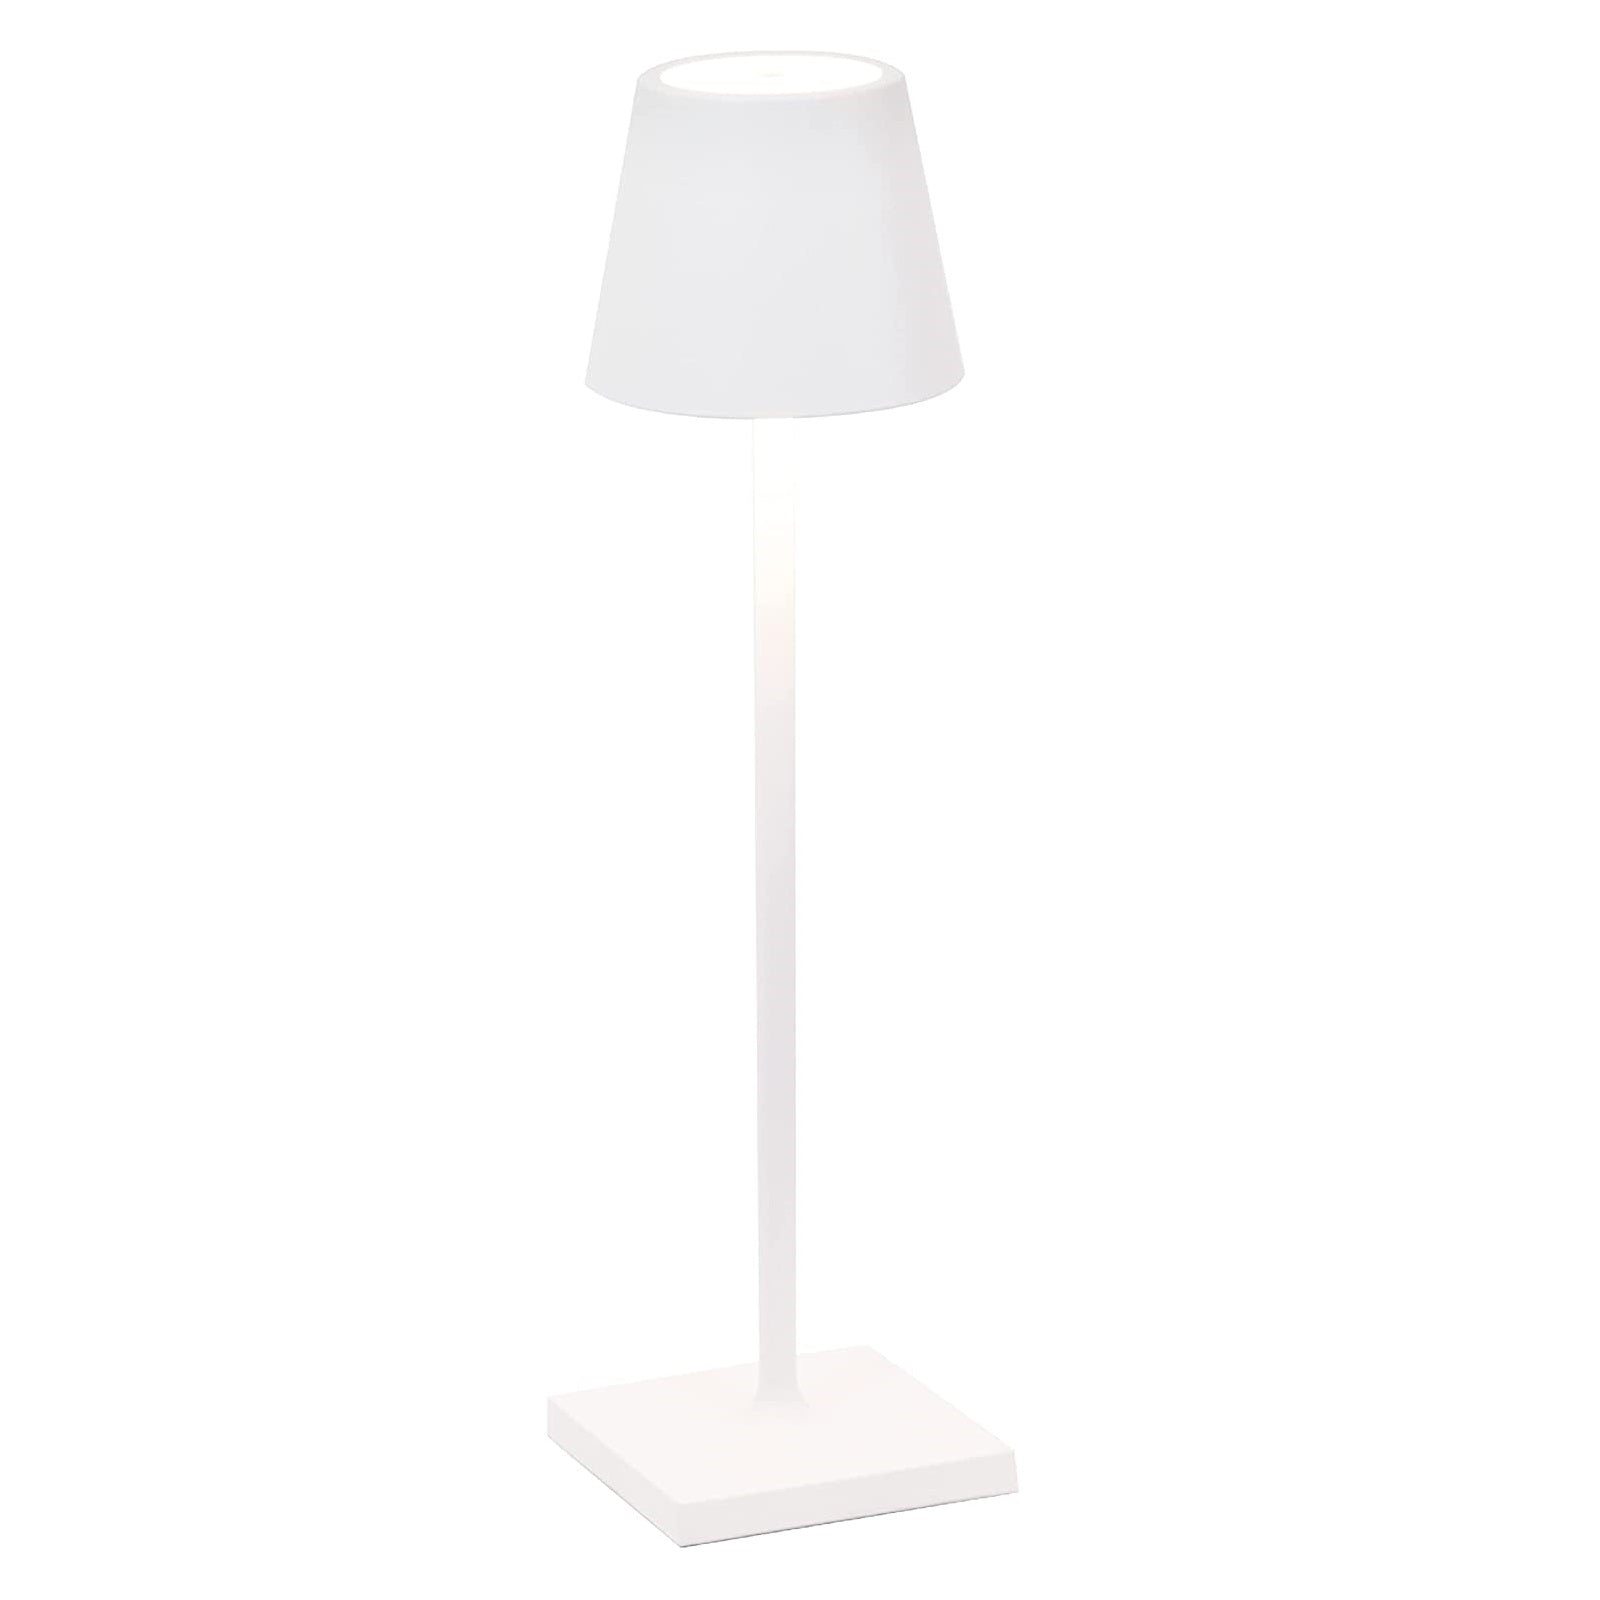 Zafferano Poldina Pro Micro Rechargeable Table Lamp